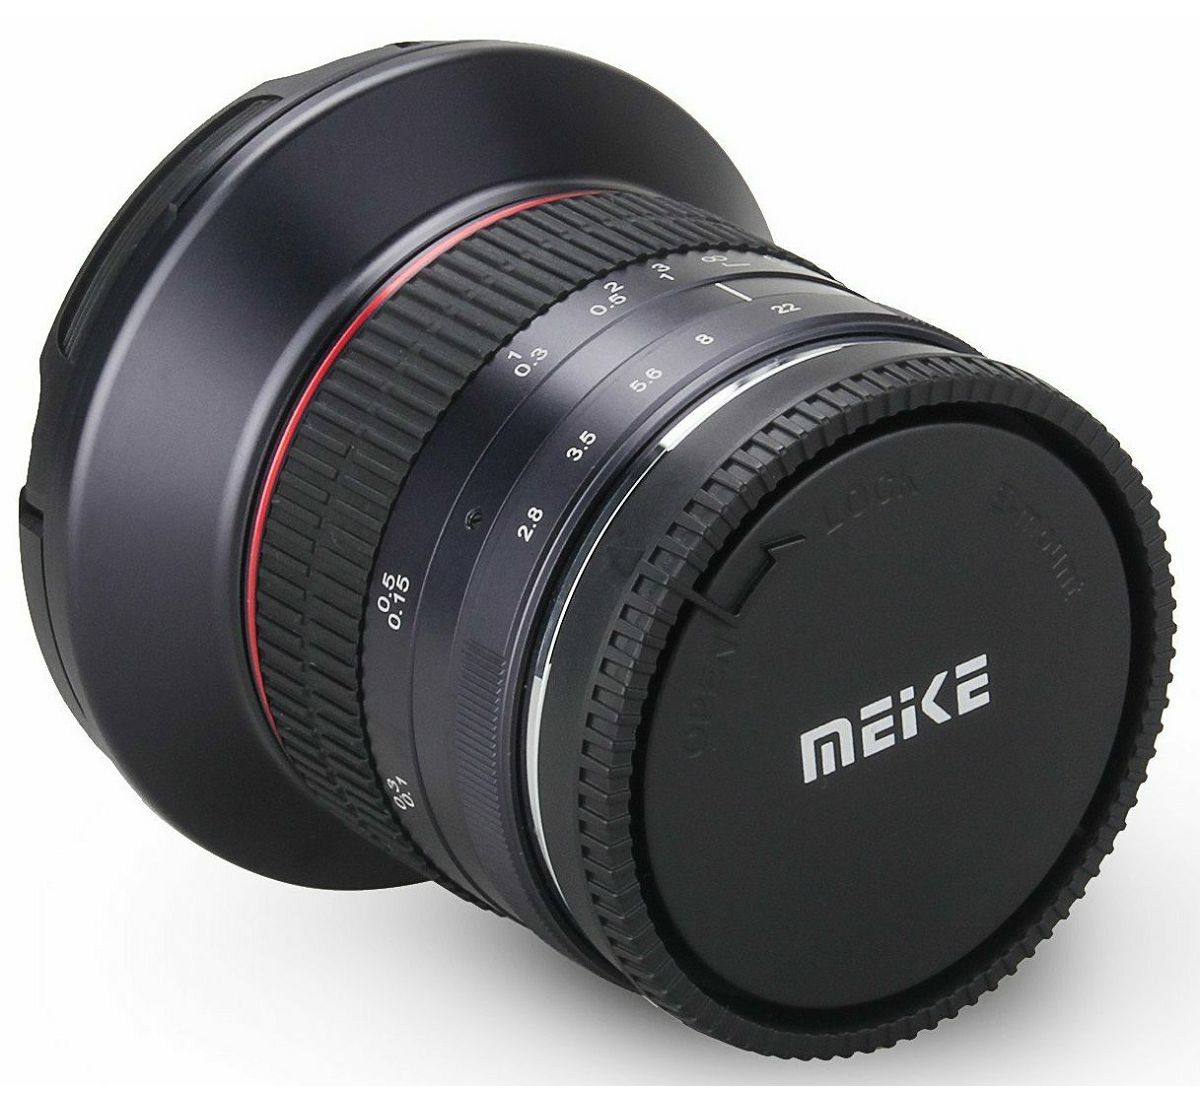 Meike 12mm f/2.8 ultra širokokutni objektiv za Fuji X-mount ultra-wide-angle lens